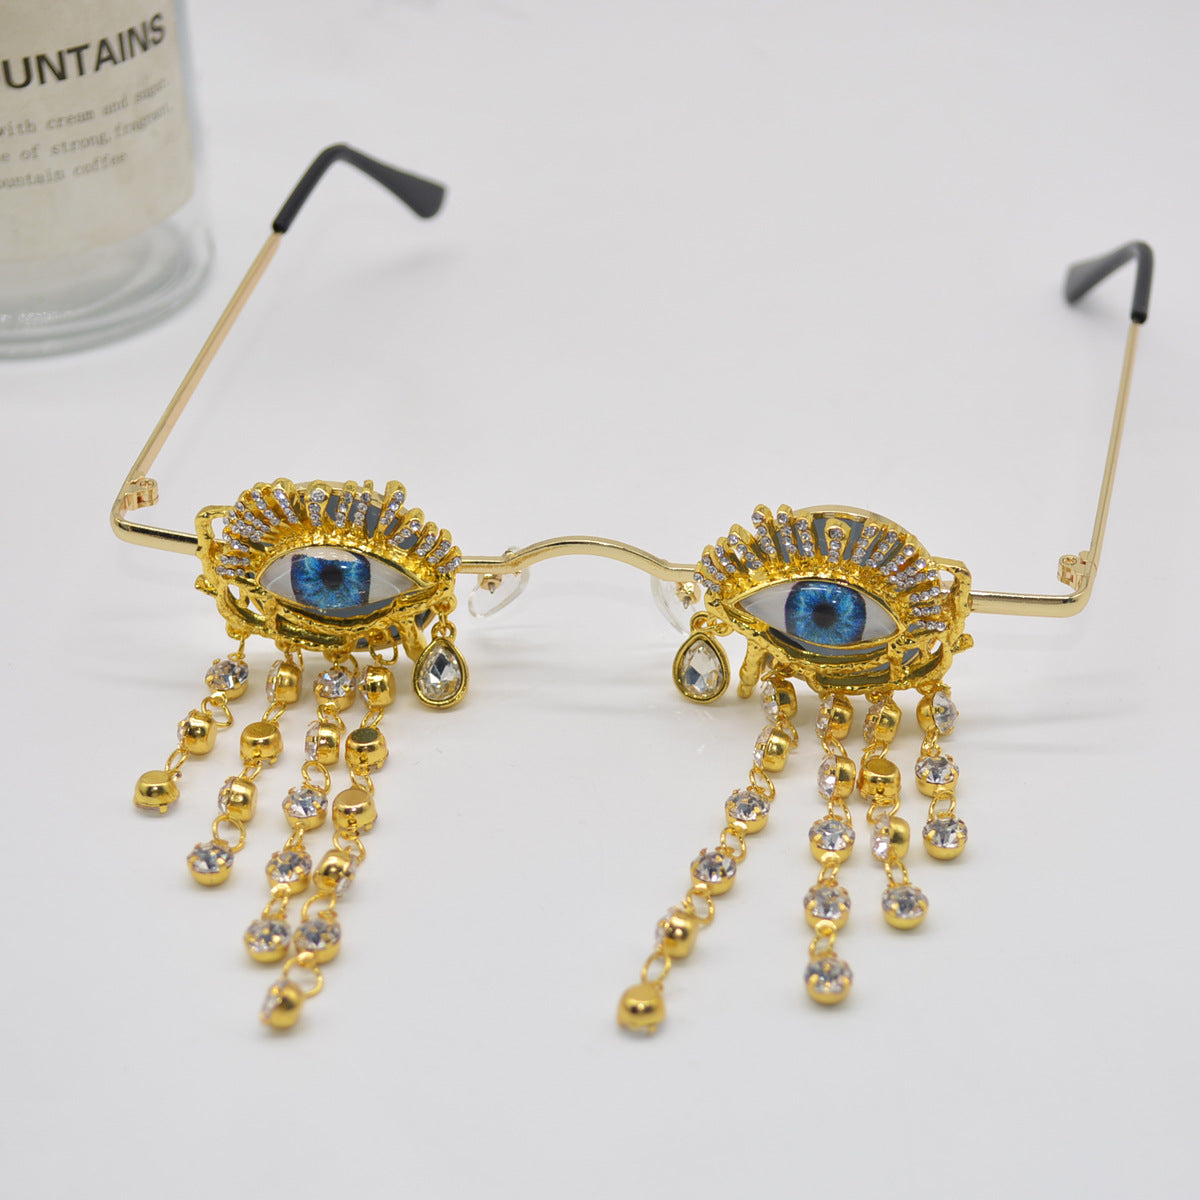 Ogle- the Surrealist Flip Lense Blue Eyed Glasses